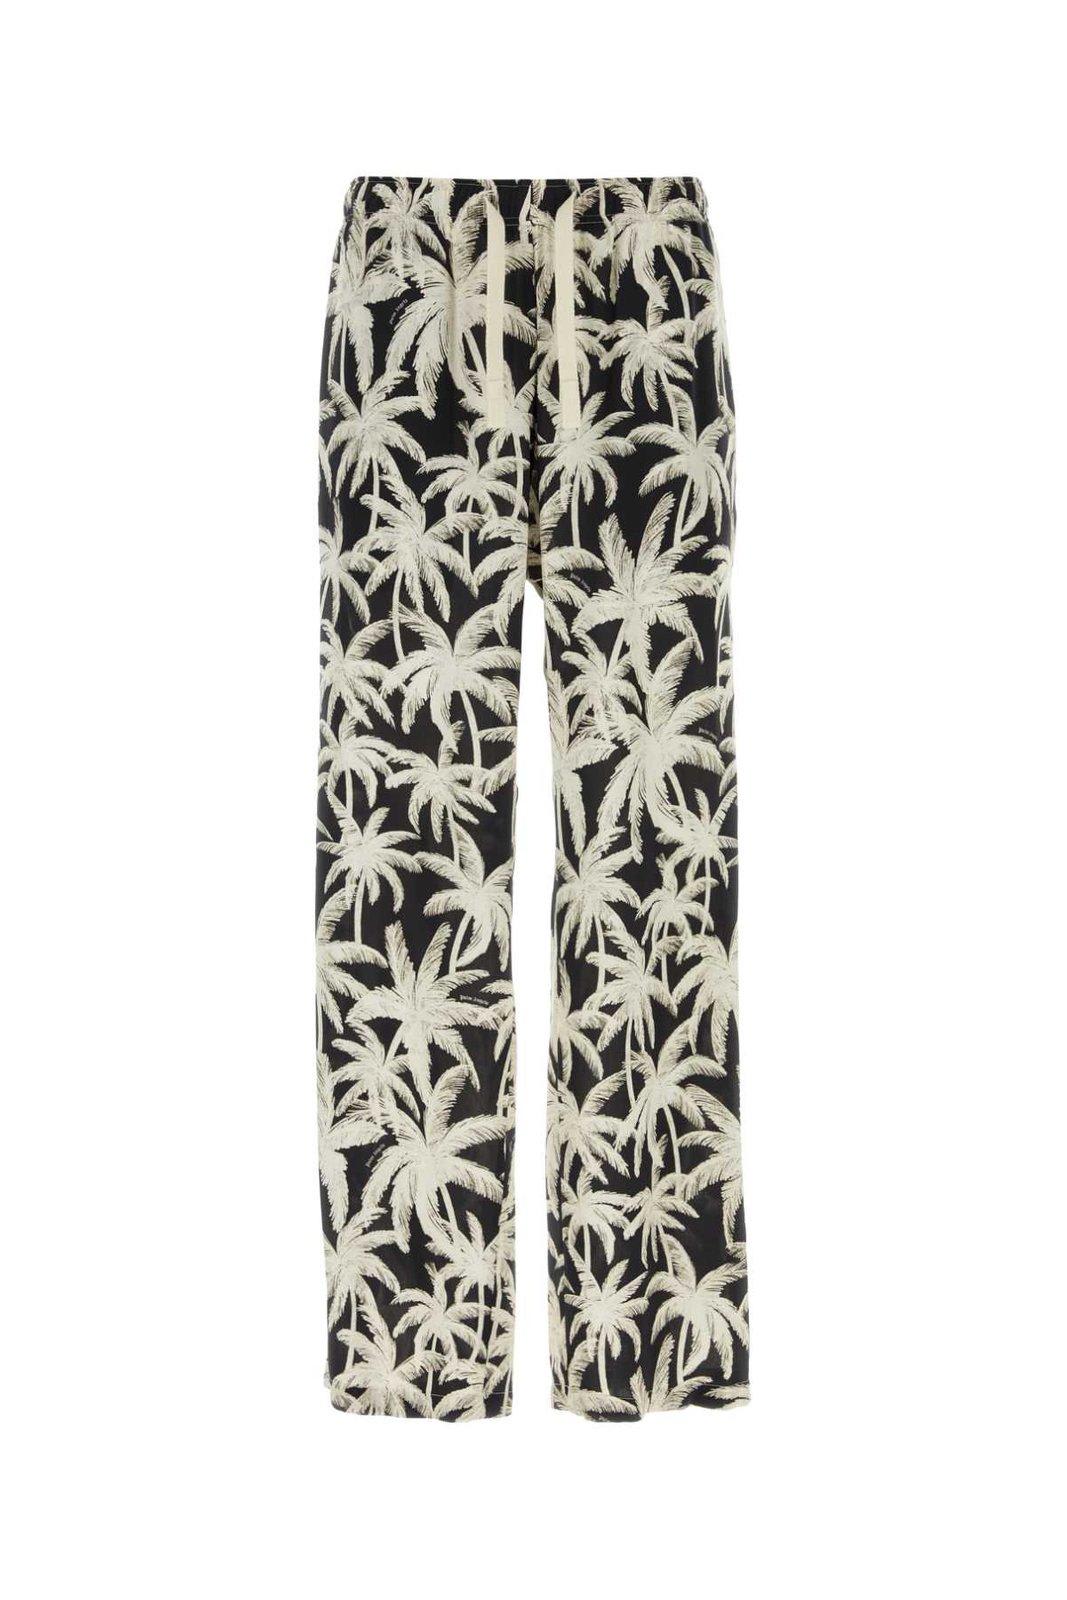 Shop Palm Angels Palm Printed Drawstring Pants In Black/white